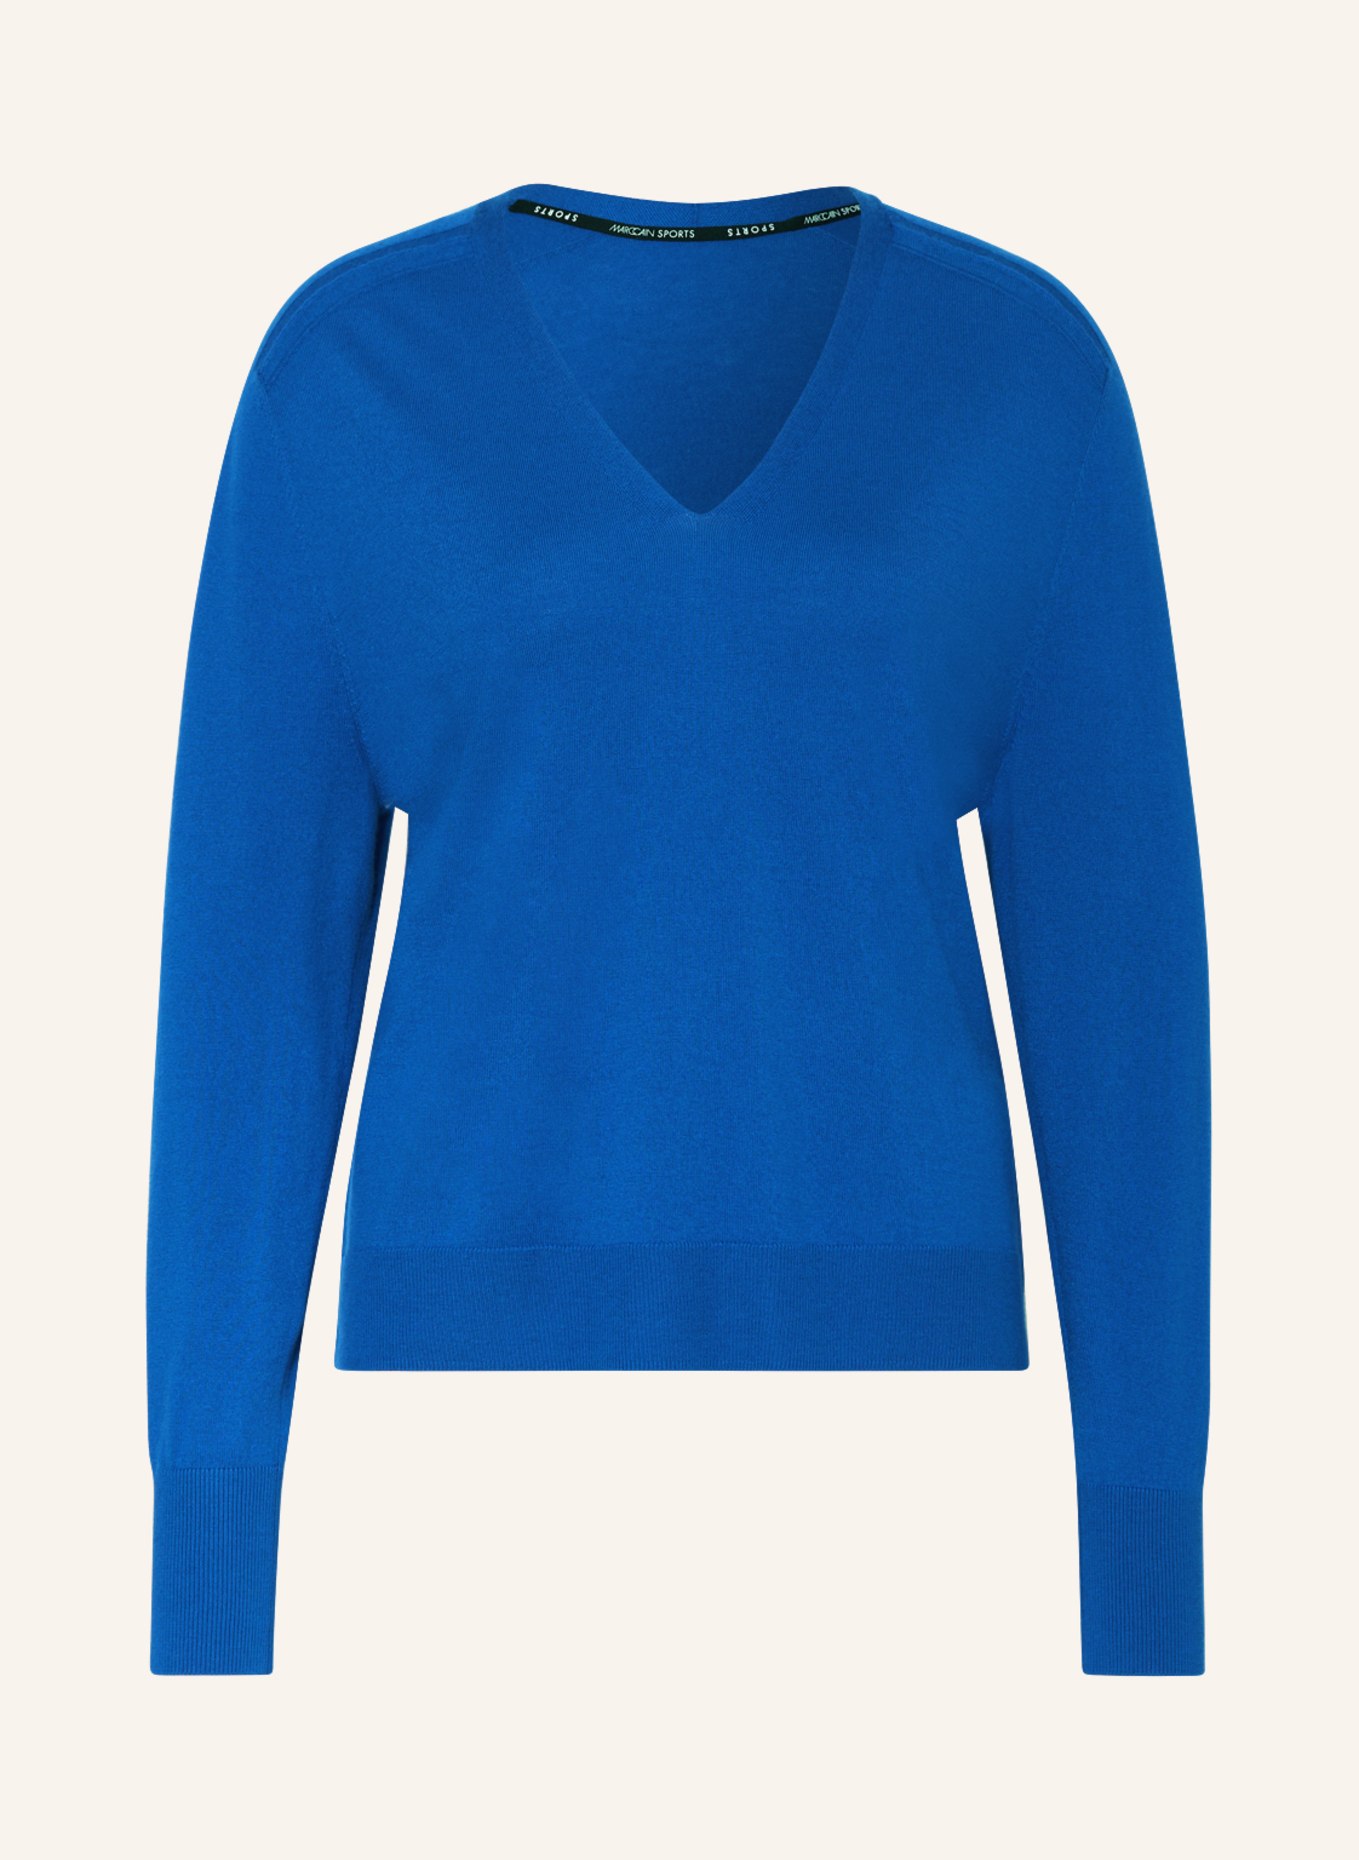 MARC CAIN Pullover, Farbe: 365 bright royal blue (Bild 1)